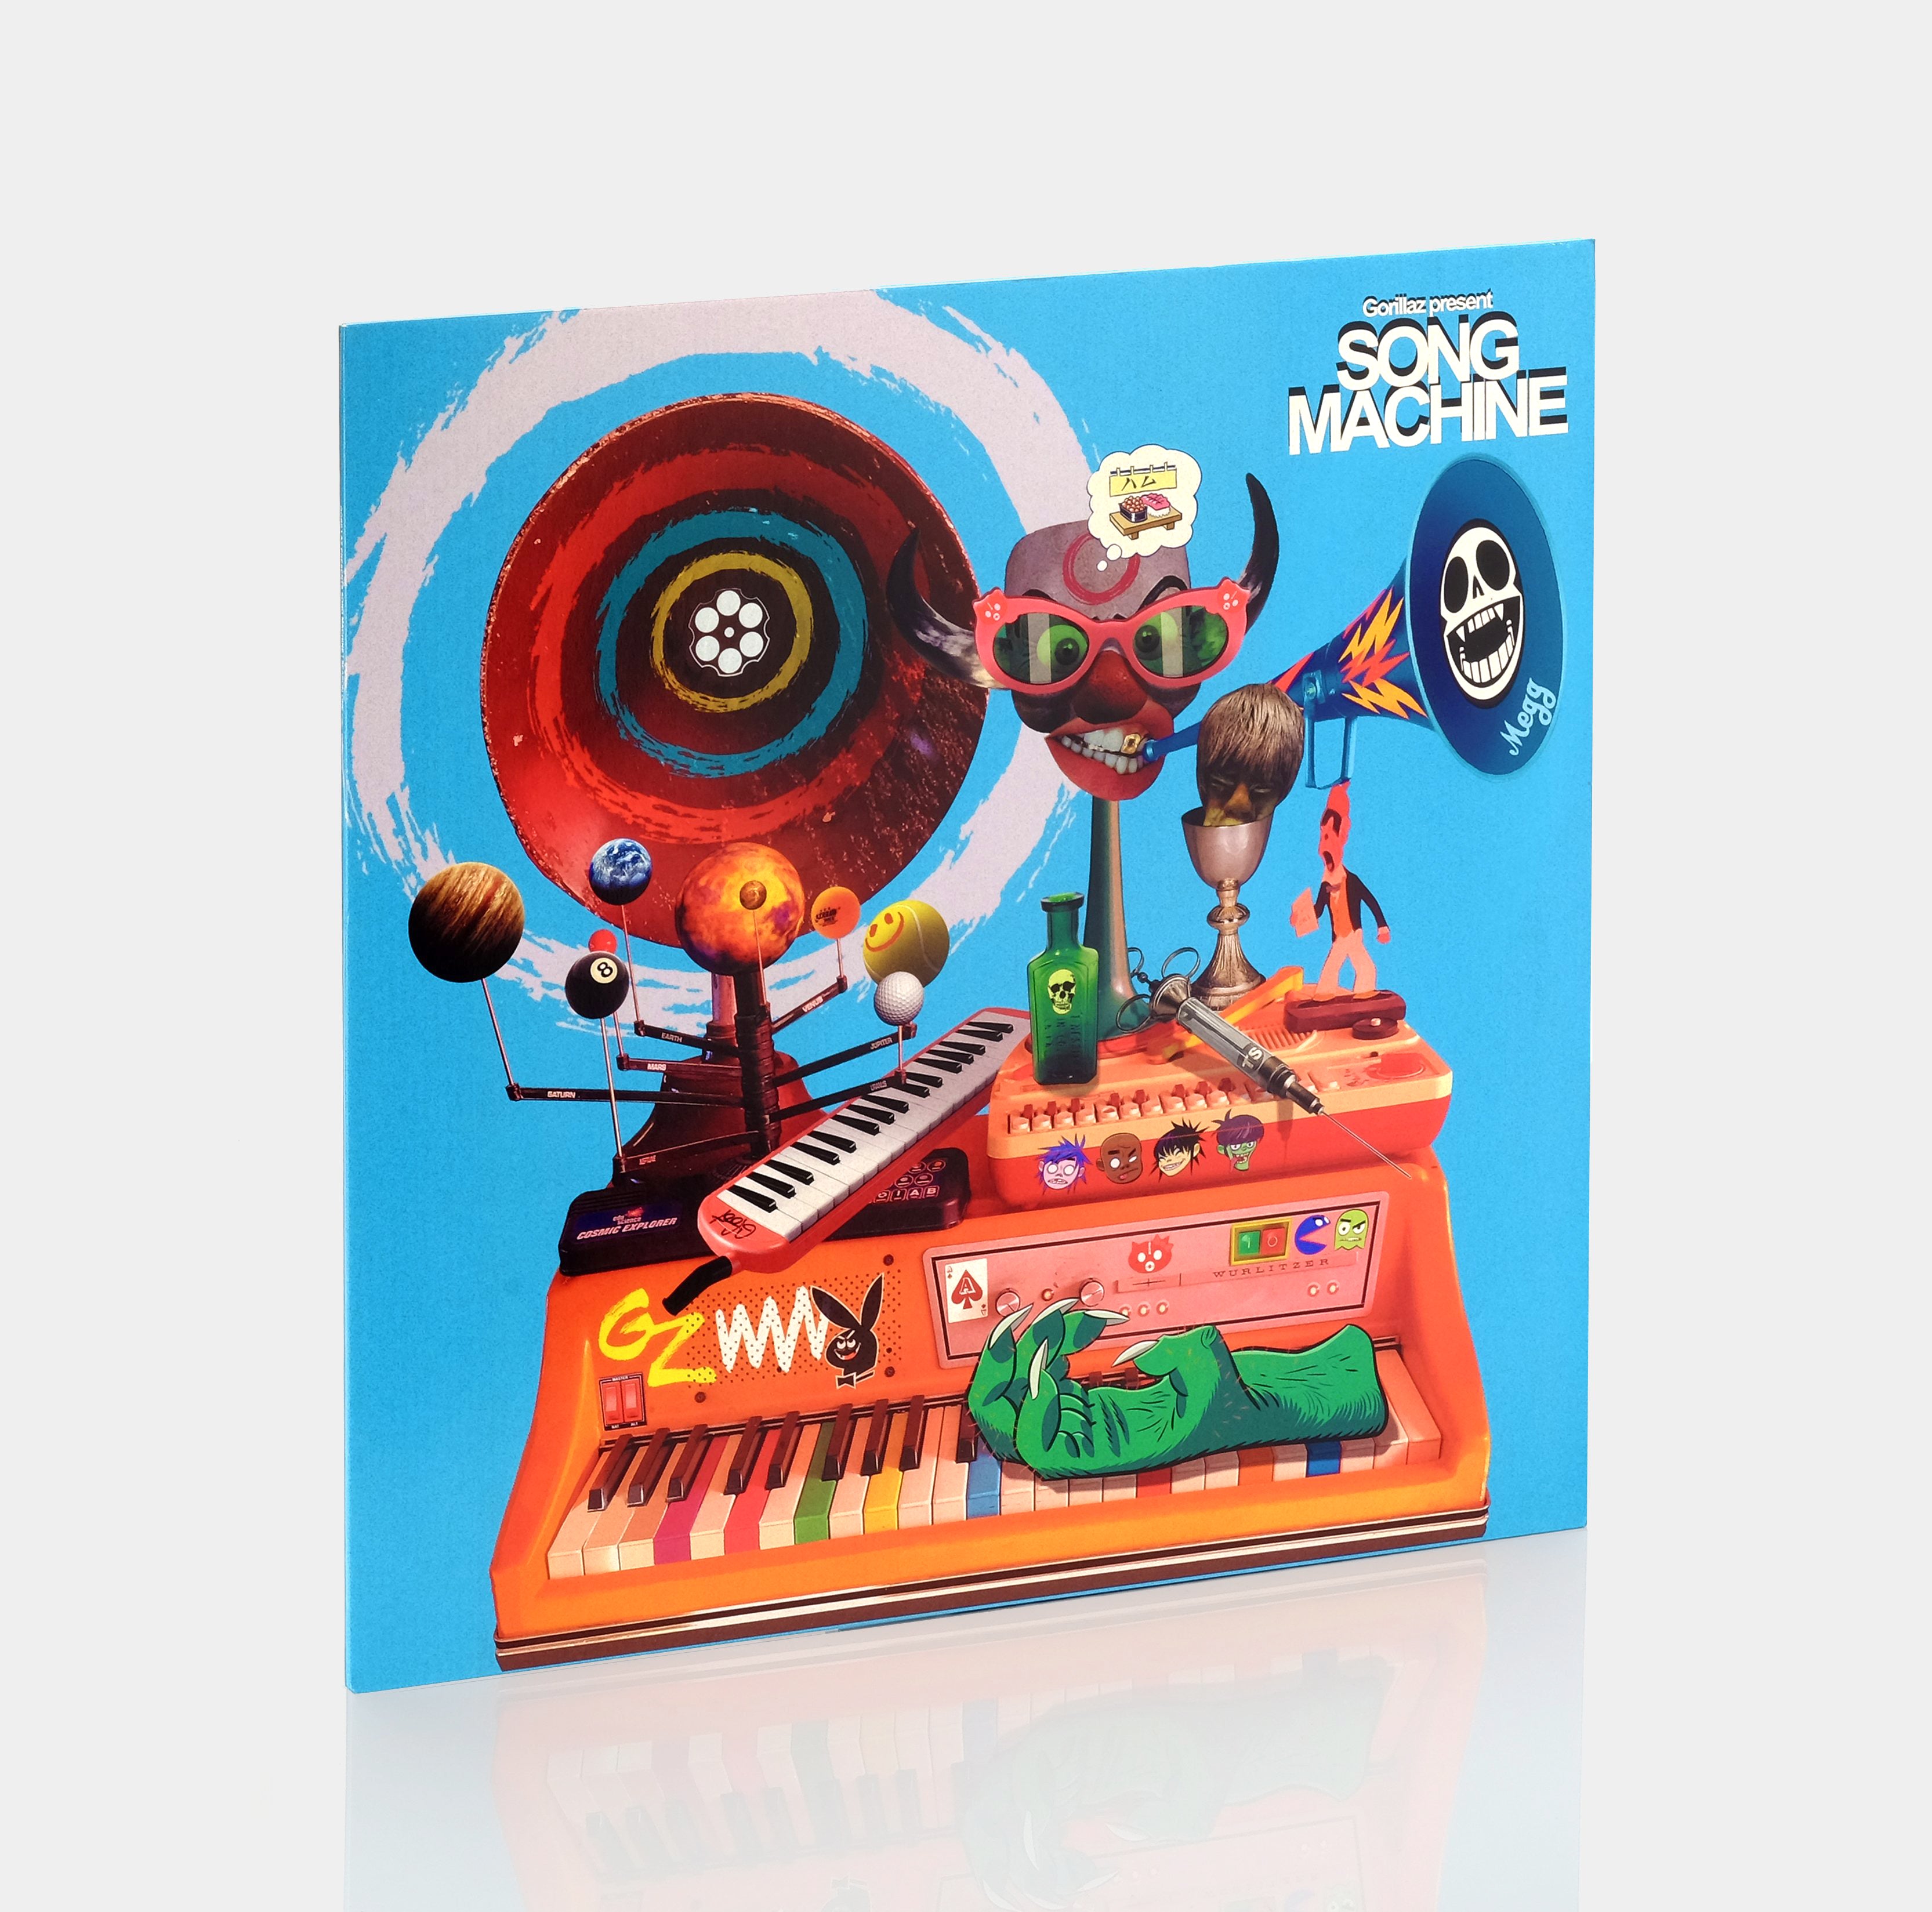 Gorillaz - Song Machine: Season One LP Vinyl Record